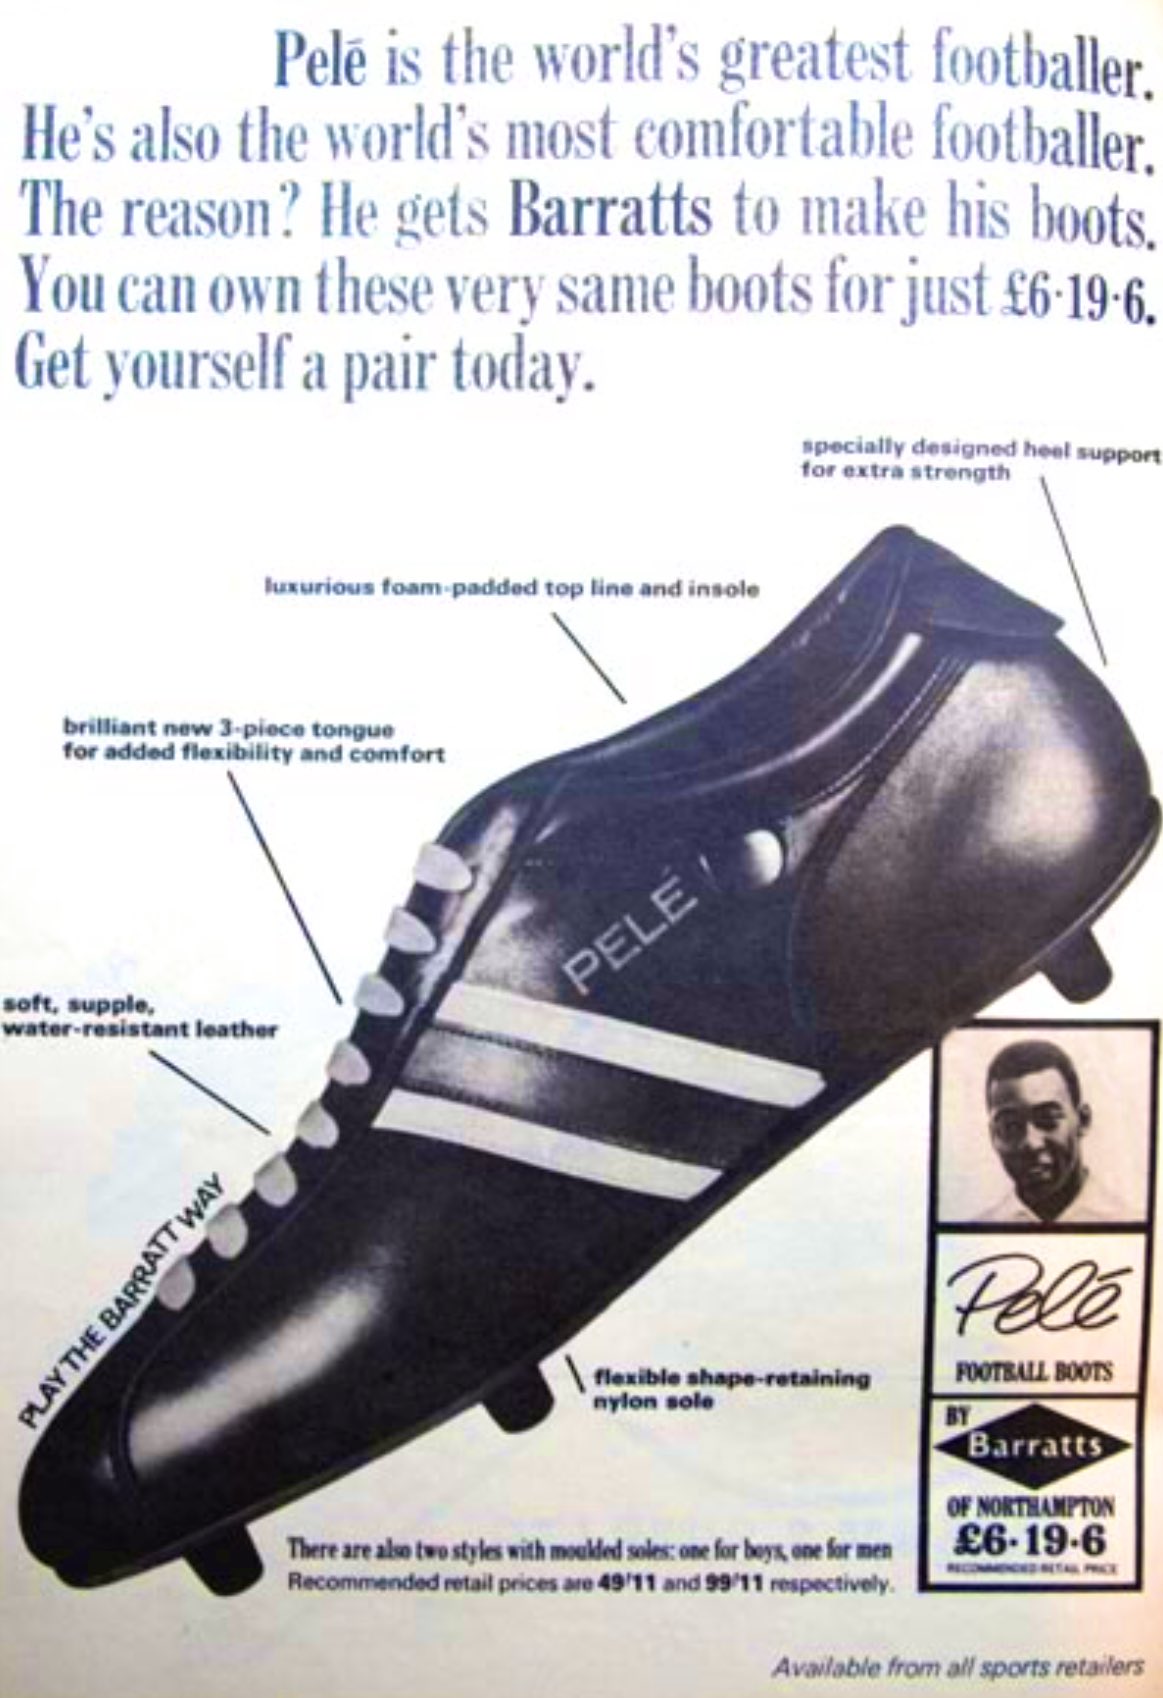 Politisk komplet Bonde Football Memories on X: "Advertisement for Barratts “Pele” Boots #Barratts  #FootyBoots #Ads https://t.co/OcSQV4WJp0" / X